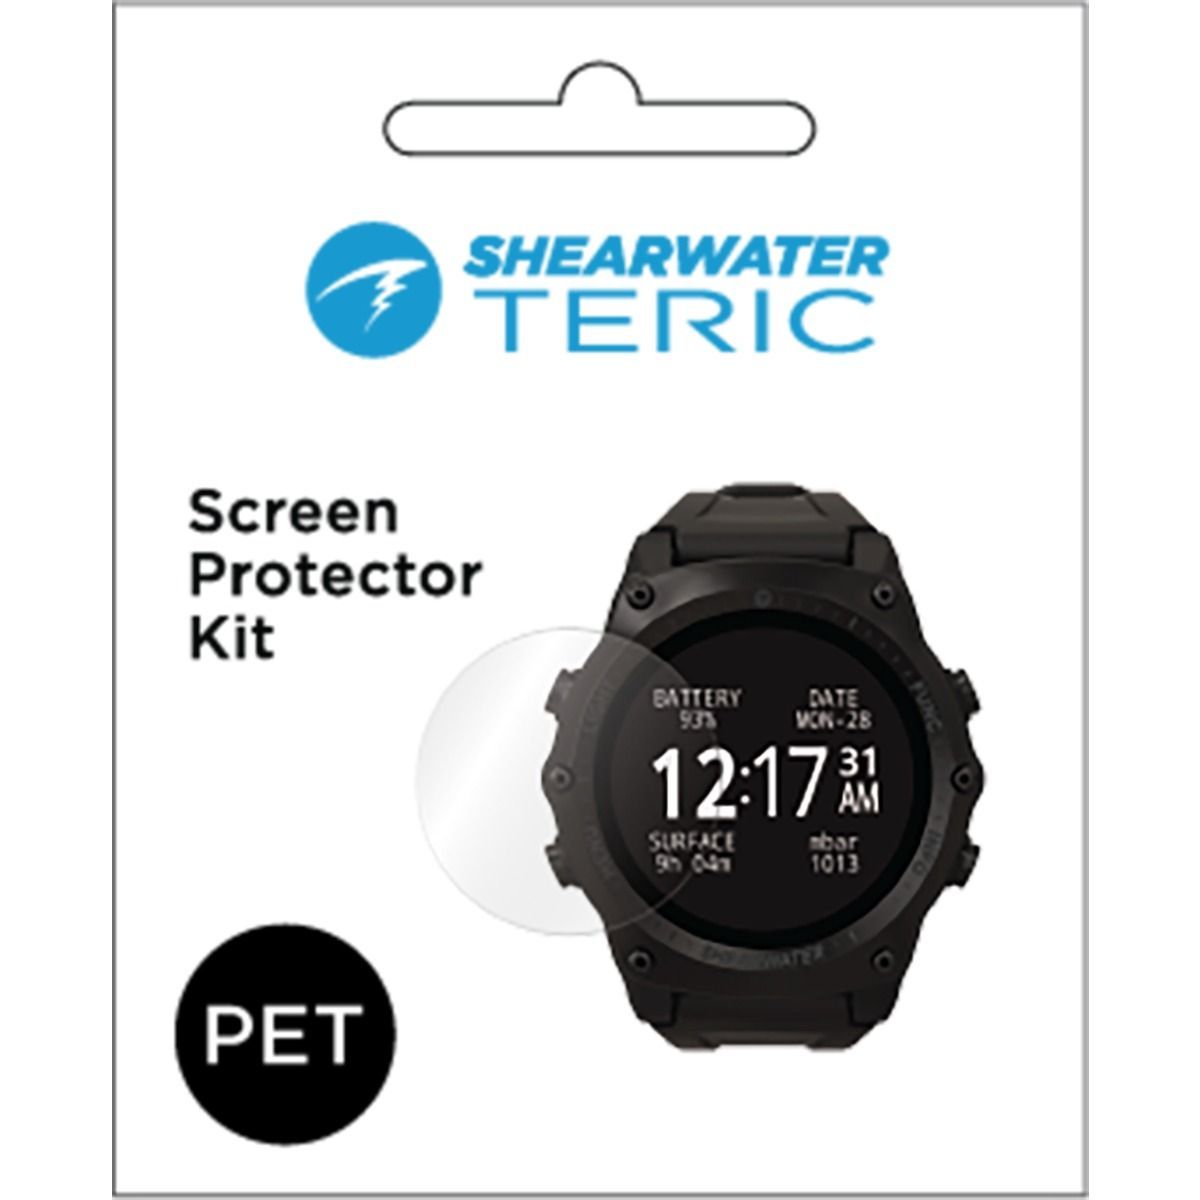 Teric Screen Protector Kit